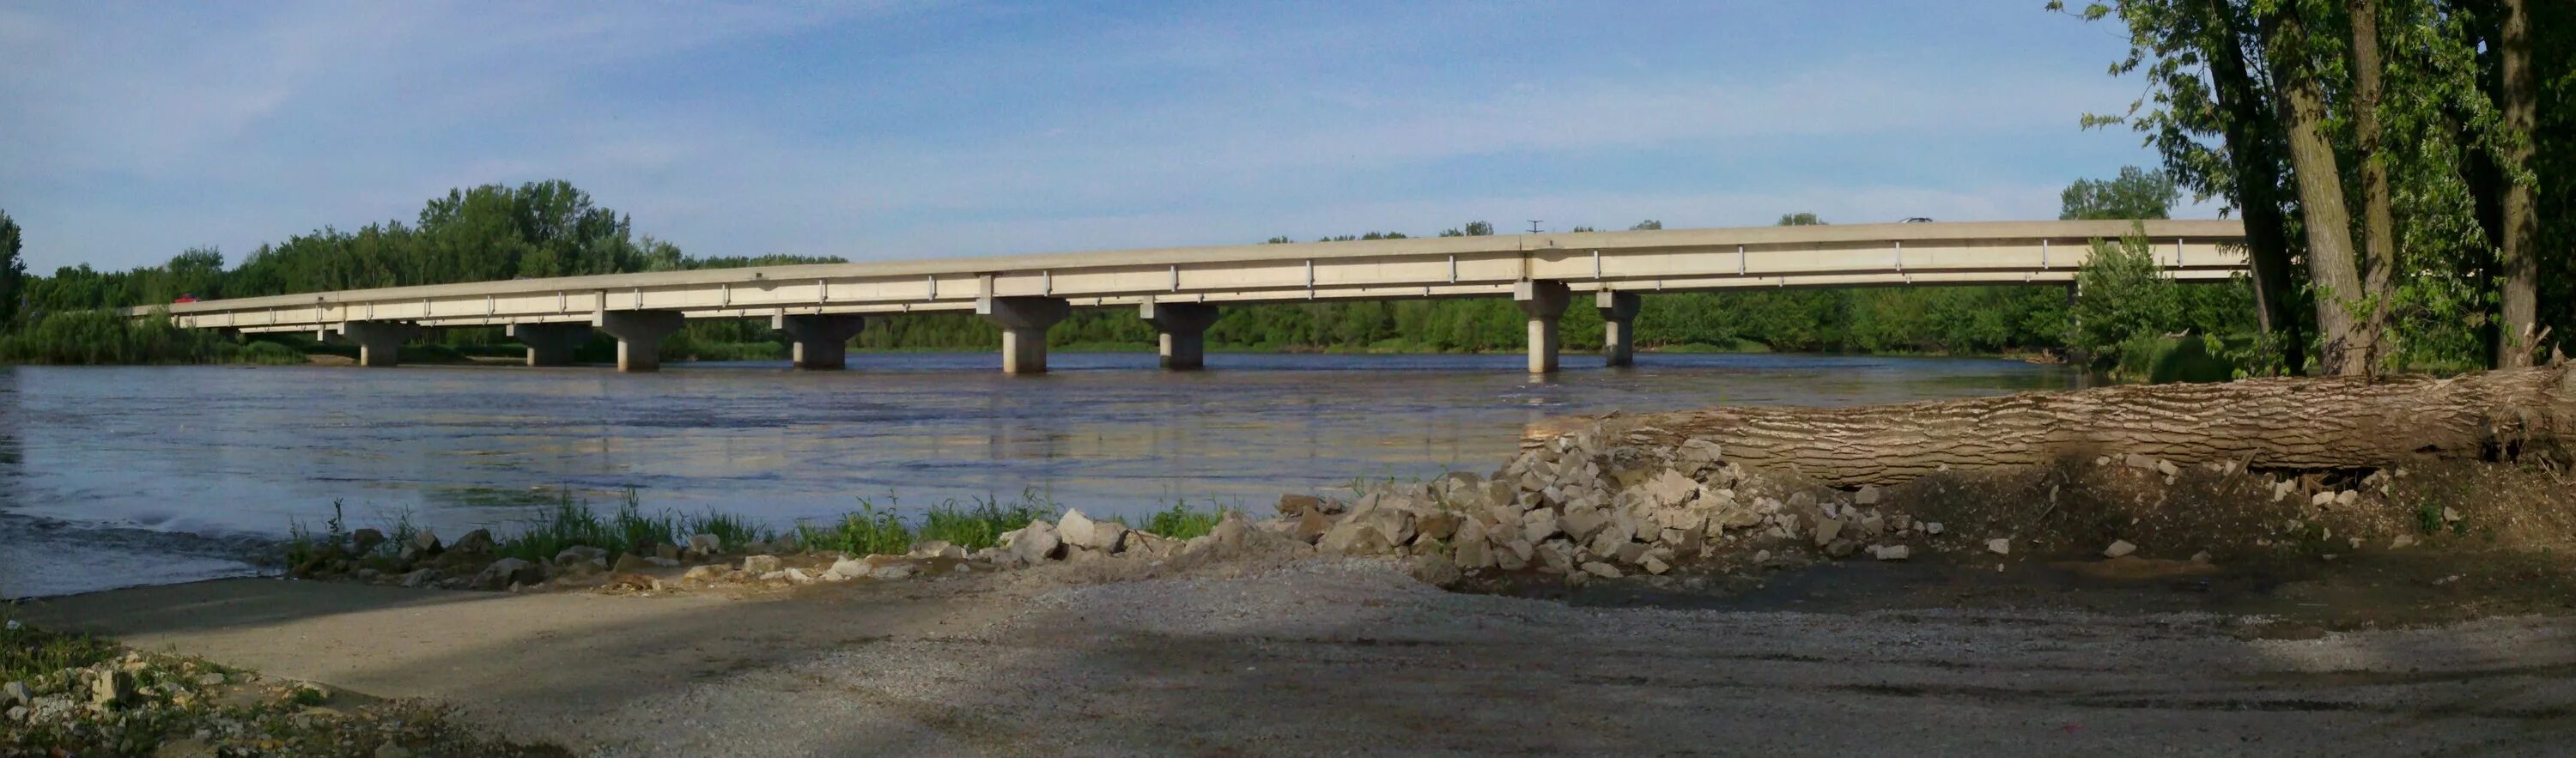 Дорога пересекает реку. Река де Мойн. Pleasant Hill, Missouri.